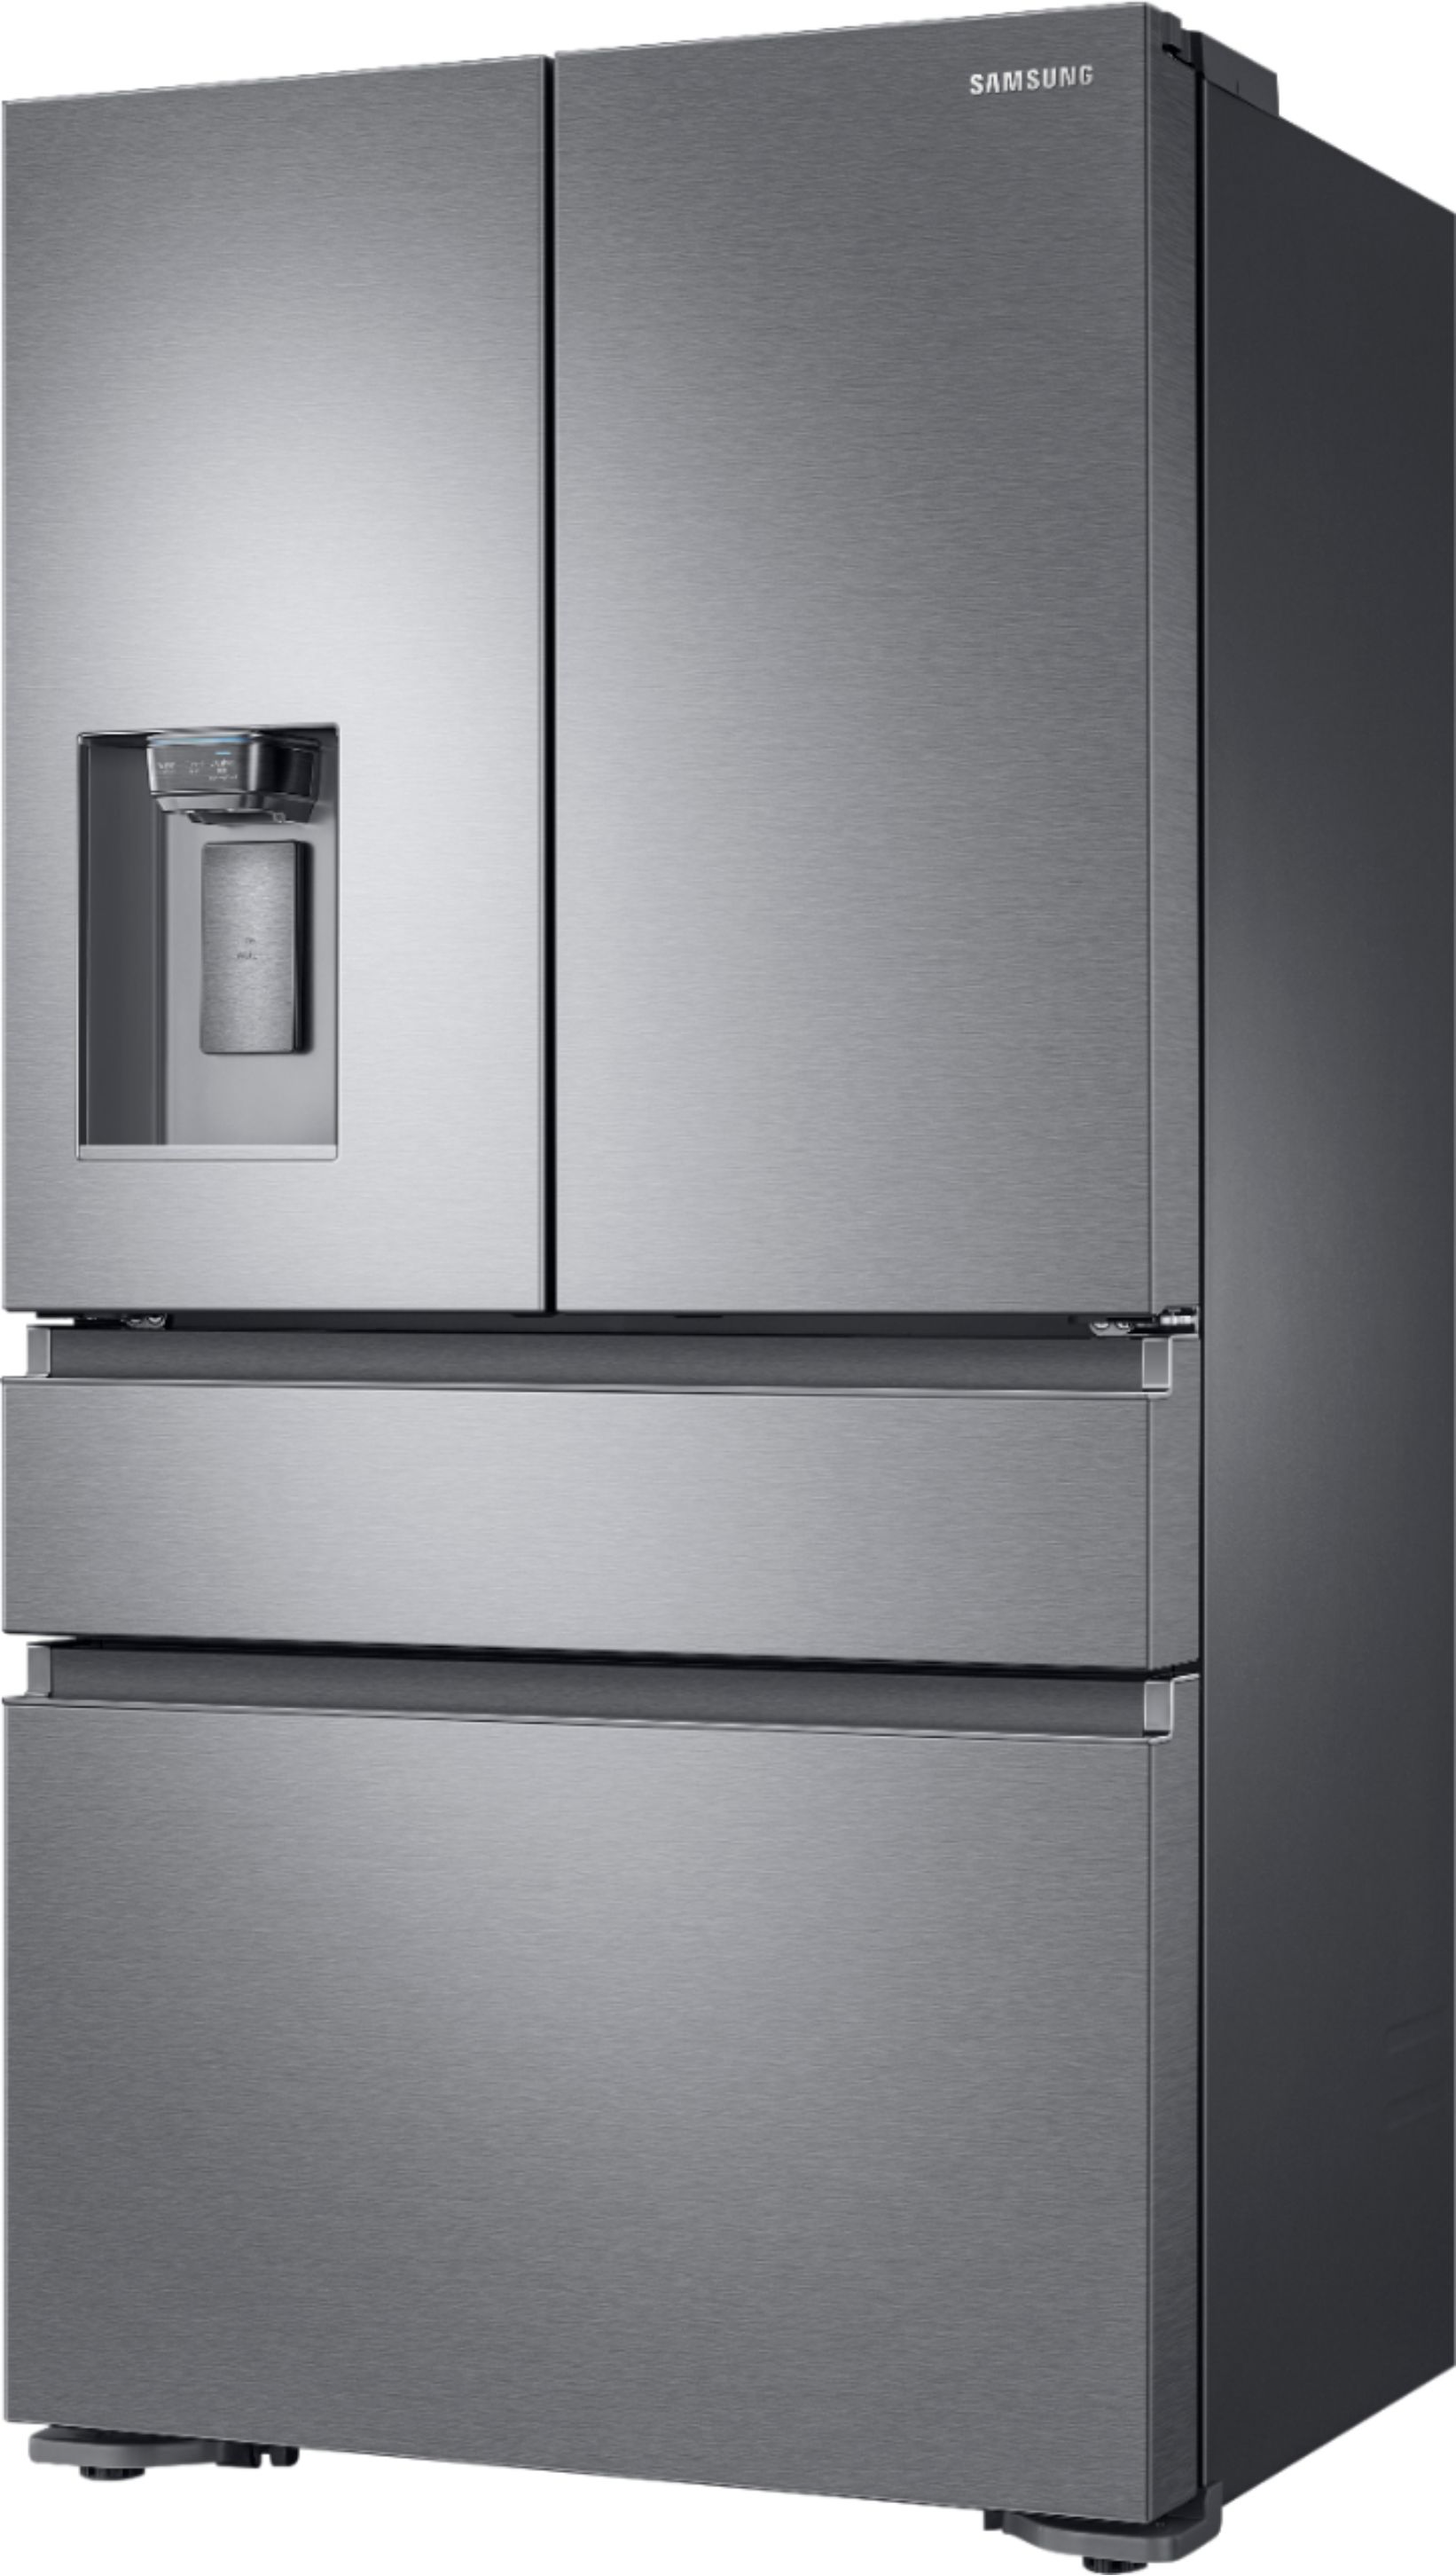 Left View: Samsung - 22.6 cu. ft. 4-Door Flex French Door Counter Depth Refrigerator with FlexZone Drawer - Stainless Steel